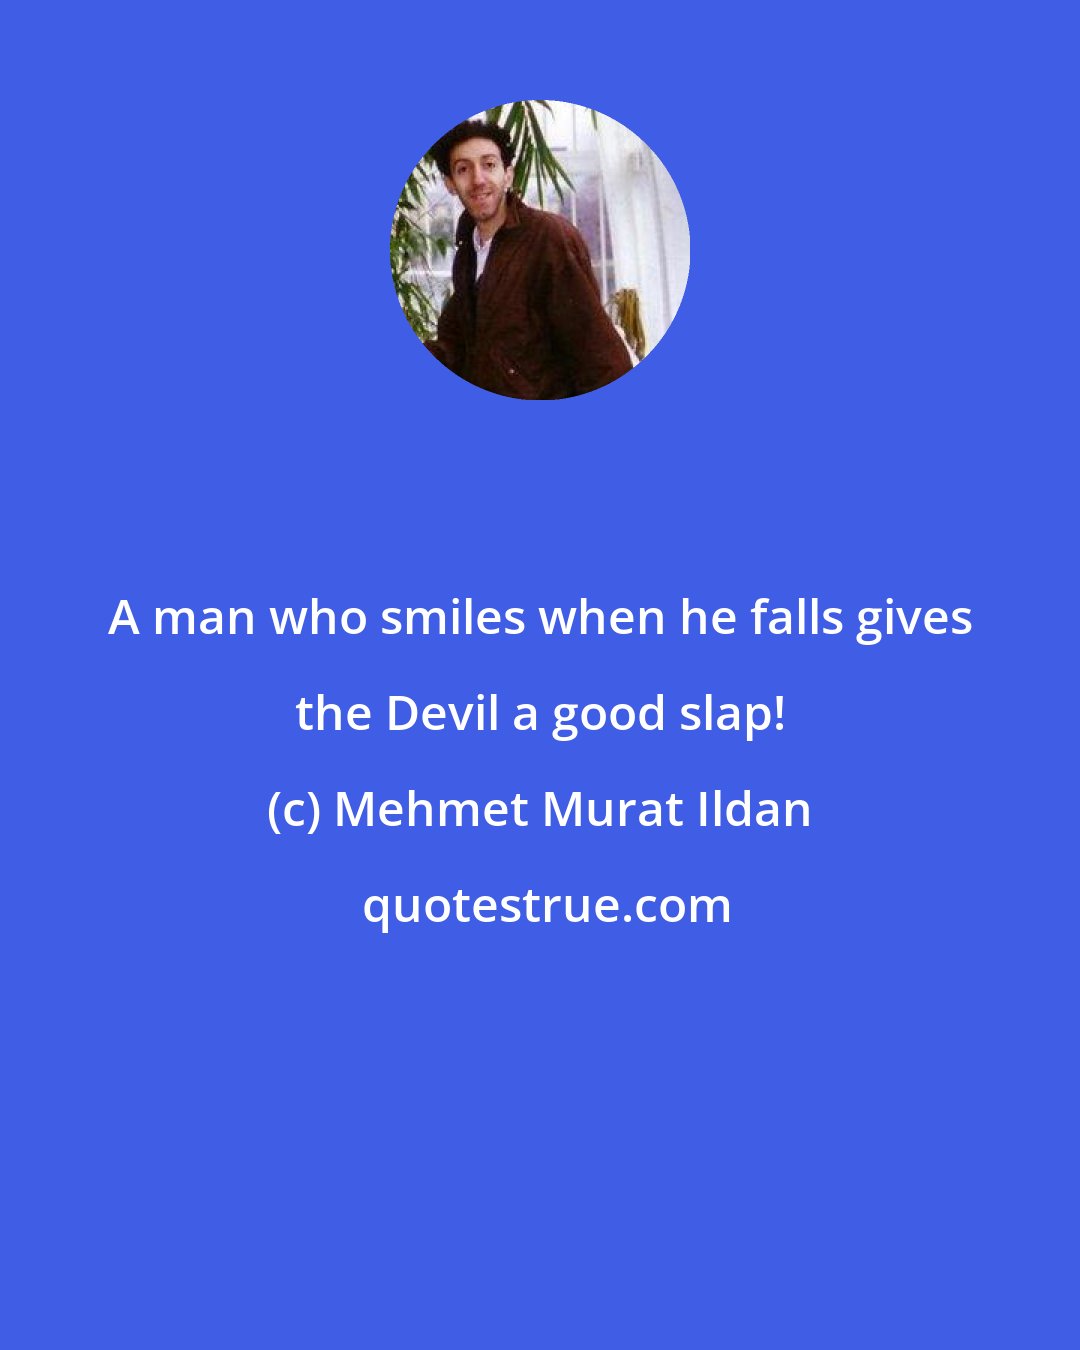 Mehmet Murat Ildan: A man who smiles when he falls gives the Devil a good slap!